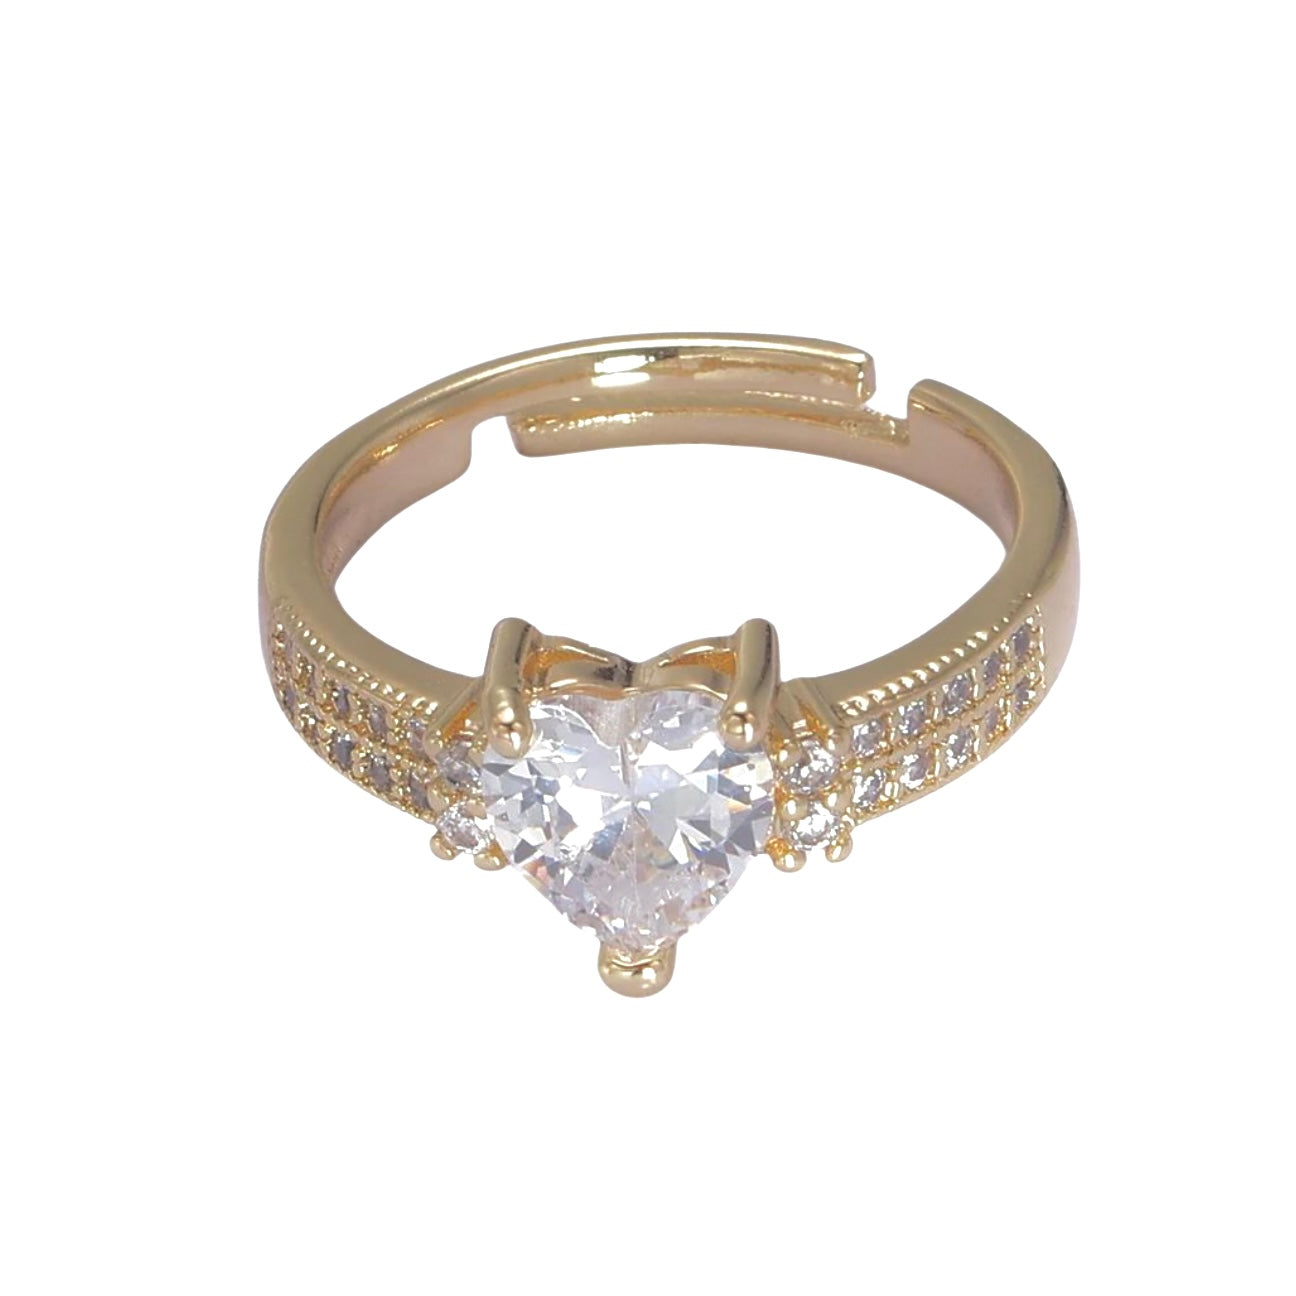 “promise” 24k gold filled heart adjustable ring